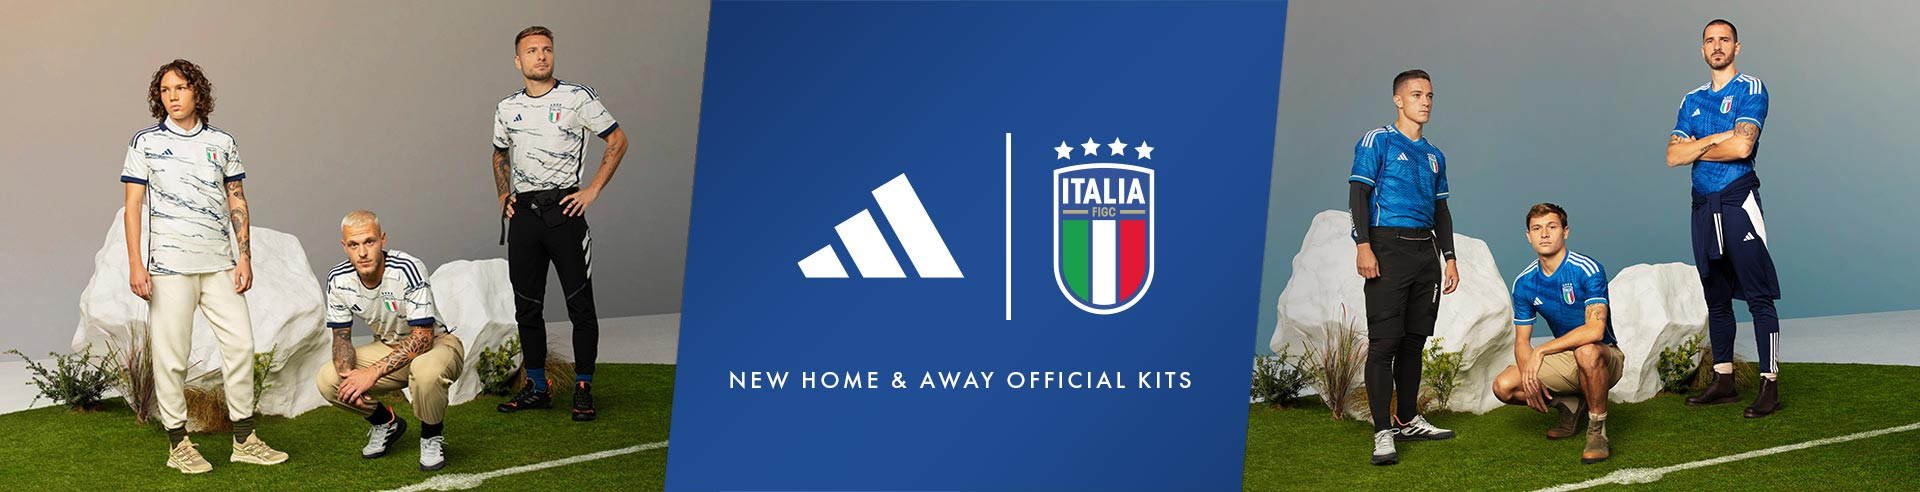 ADIDAS x ITALIA NEW HOME & AWAY OFFICIAL KITS